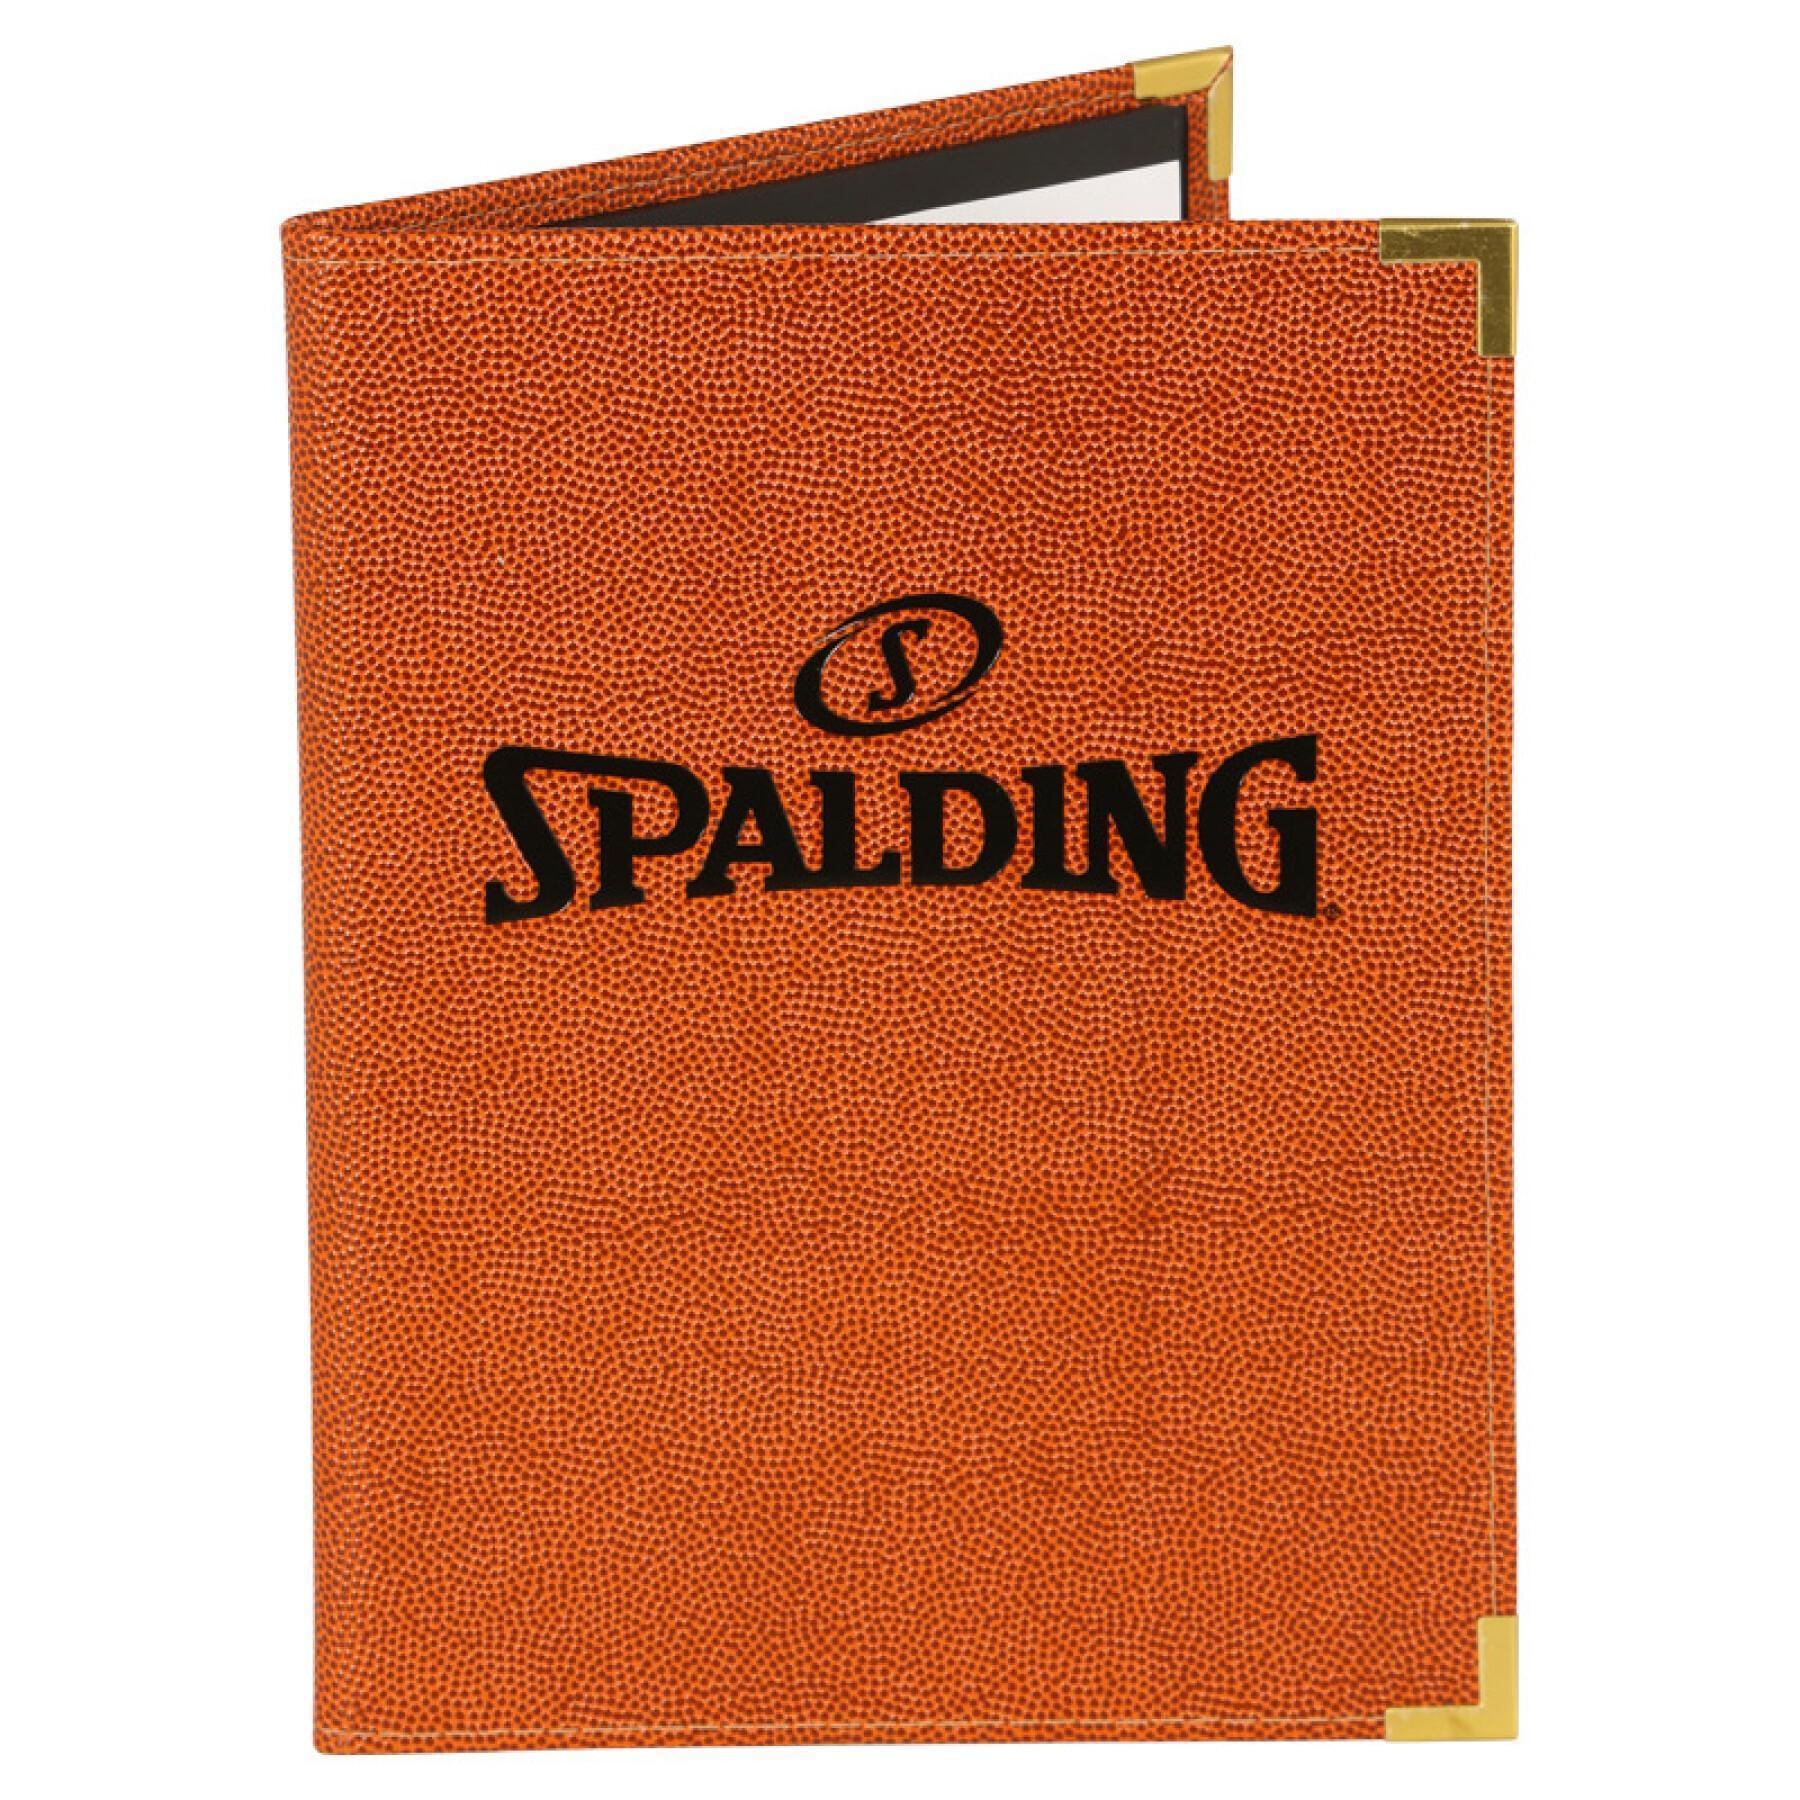 Cartella Spalding Holder A4 (68-518z)